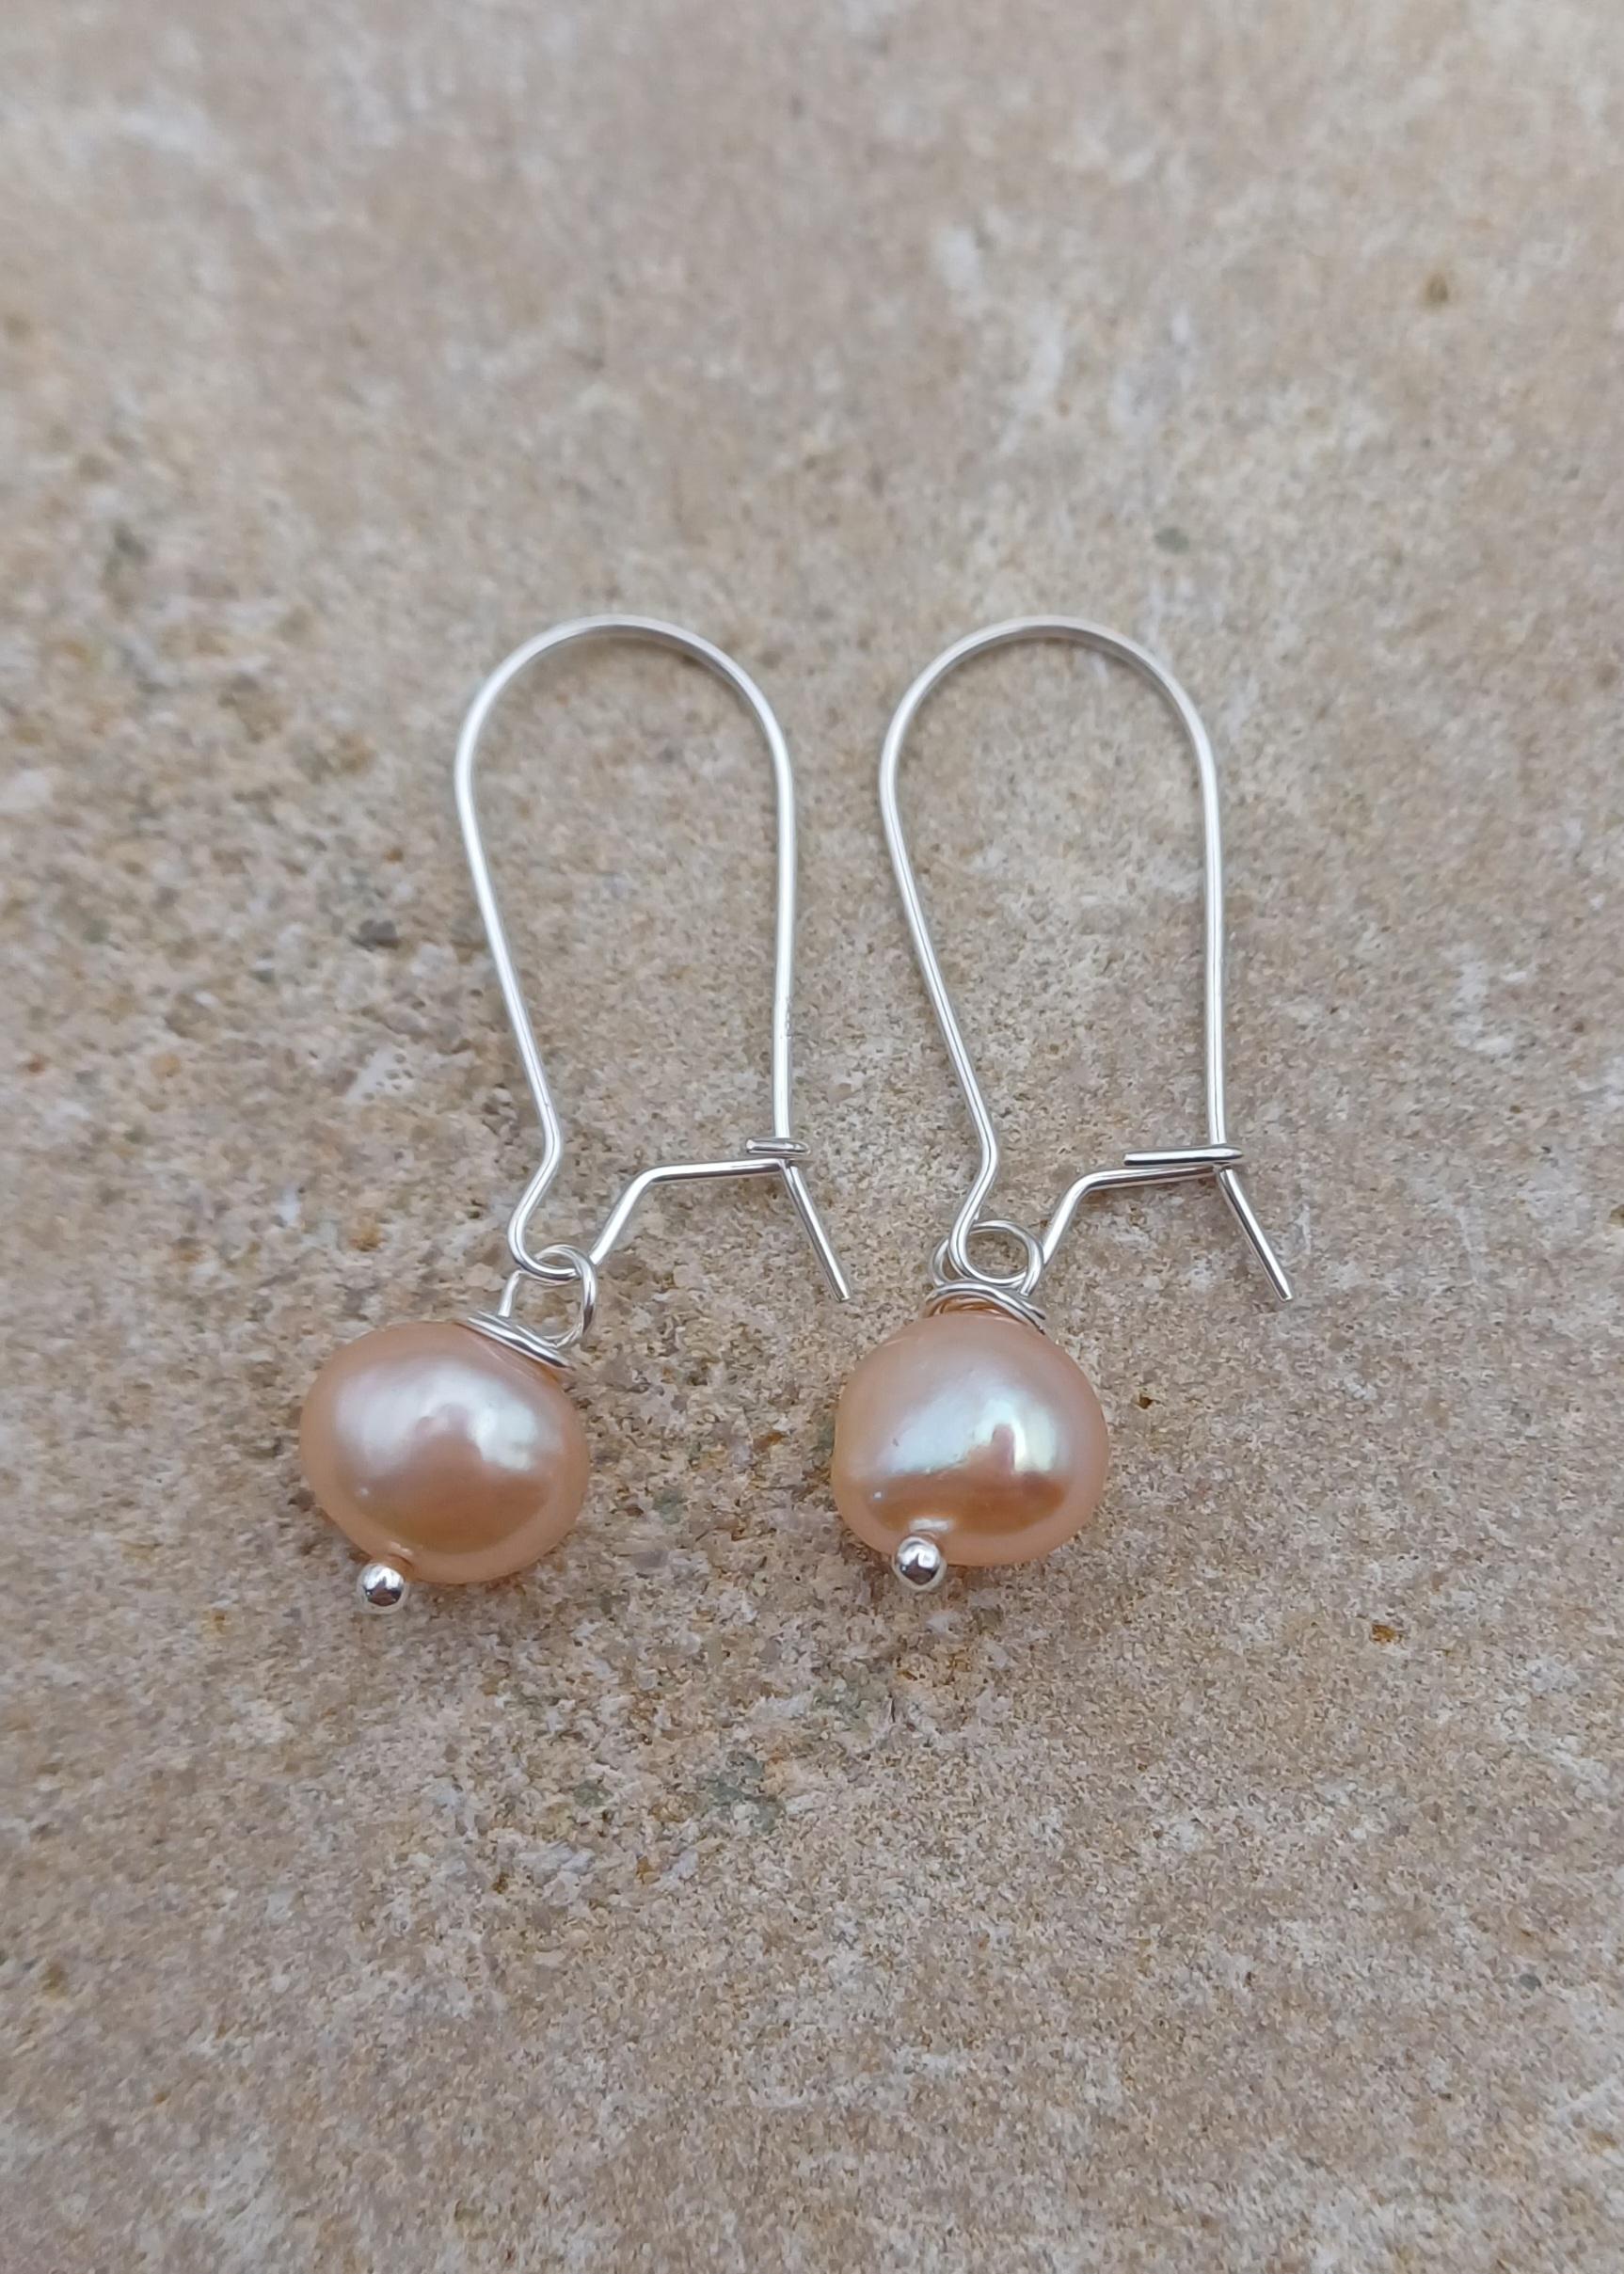 EARRINGS - Sterling Silver Pink Pearl Drop Earrings